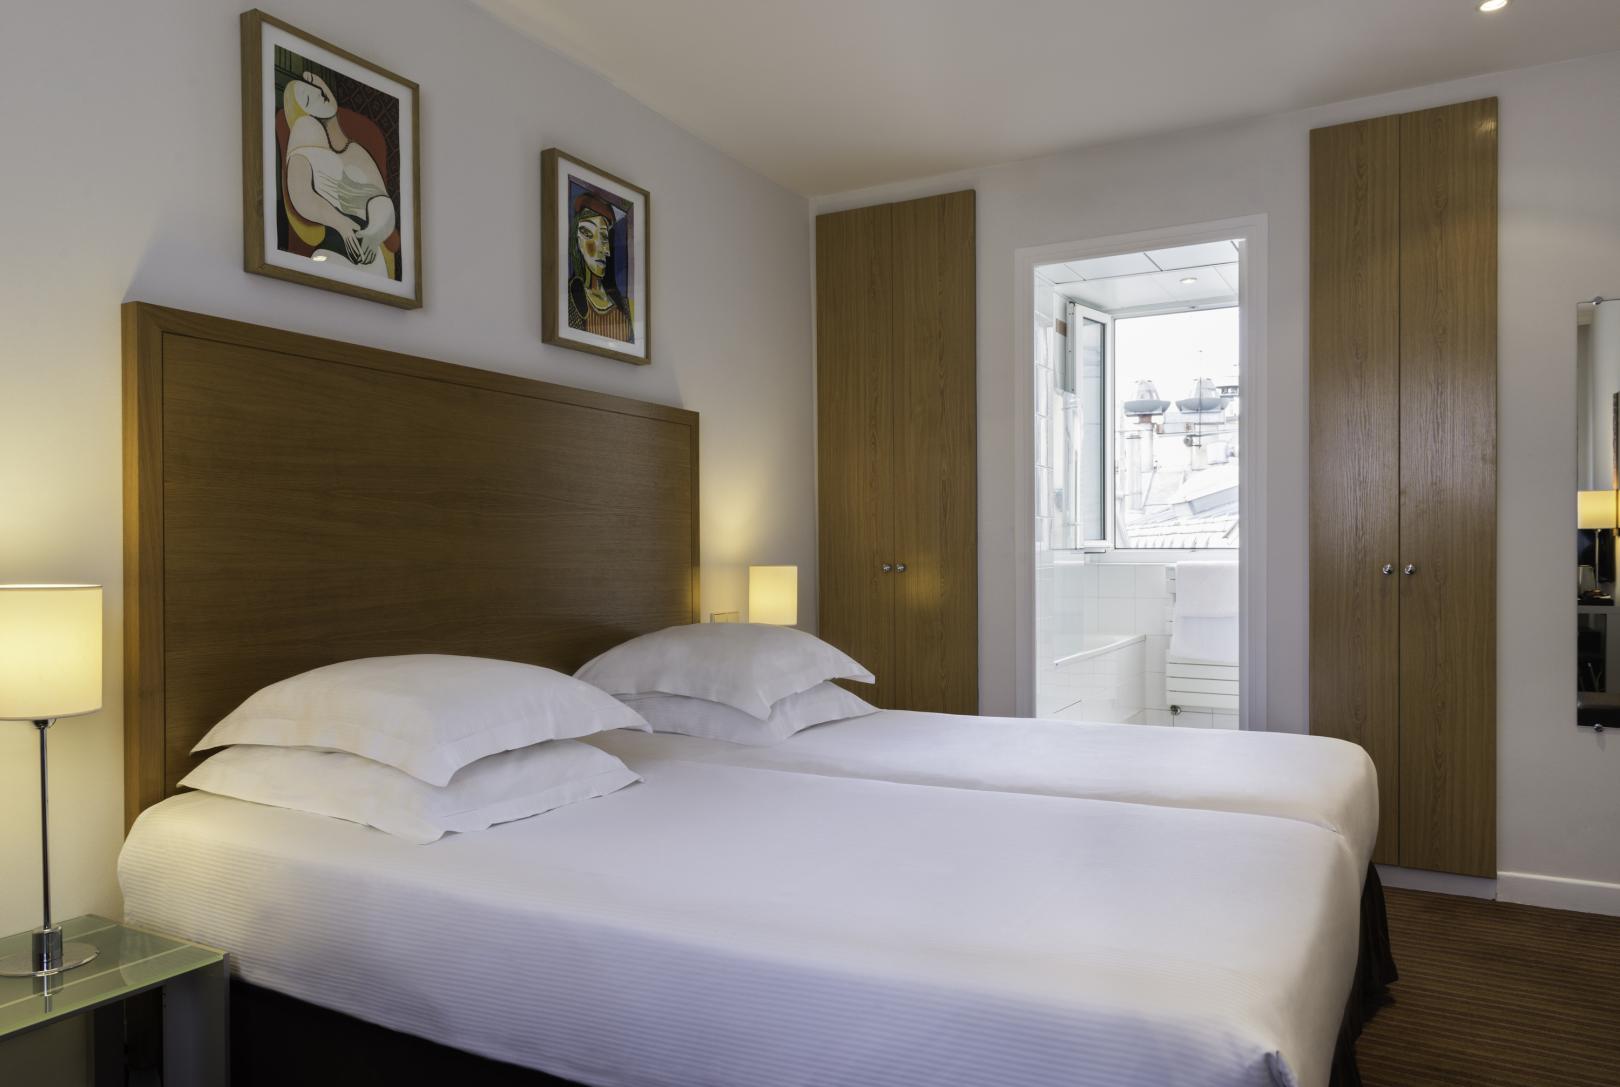 Hotel Albe Saint Michel - Room